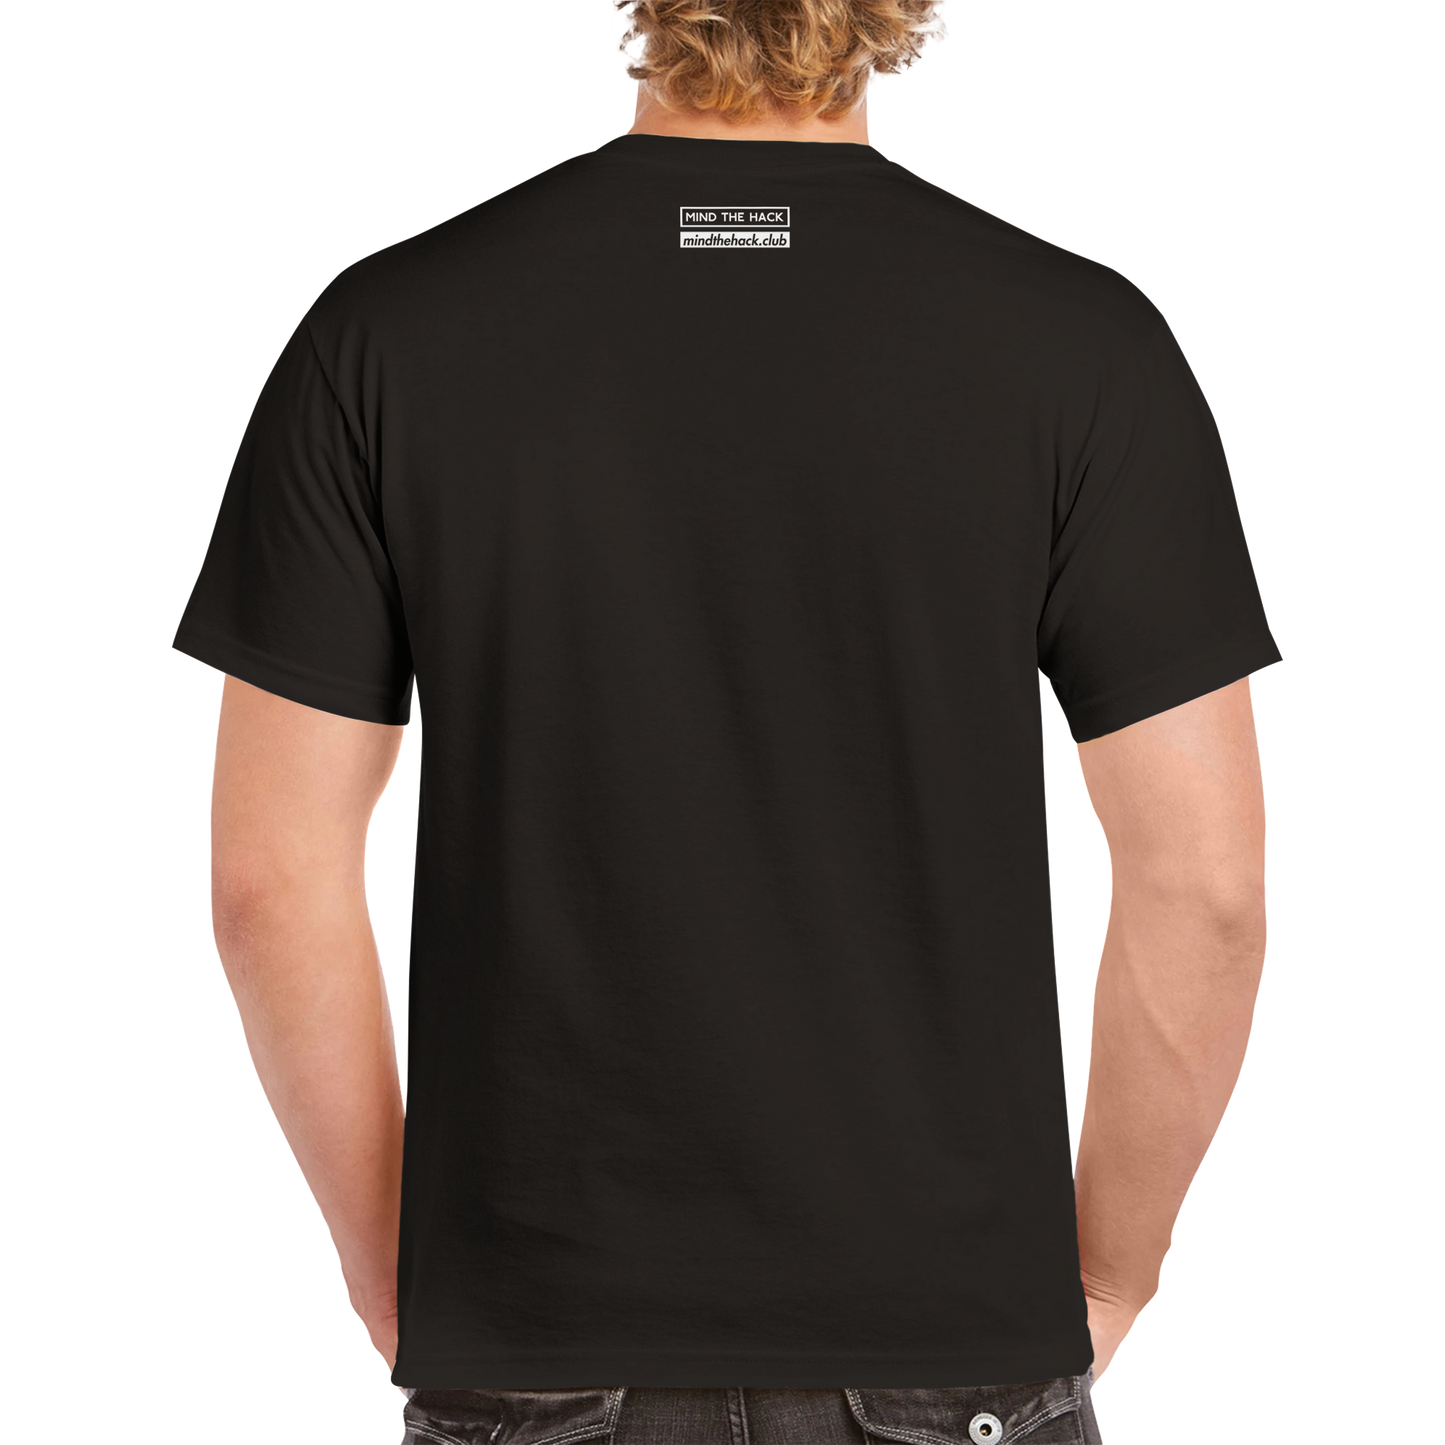 Mind The Hack Unisex T-Shirt